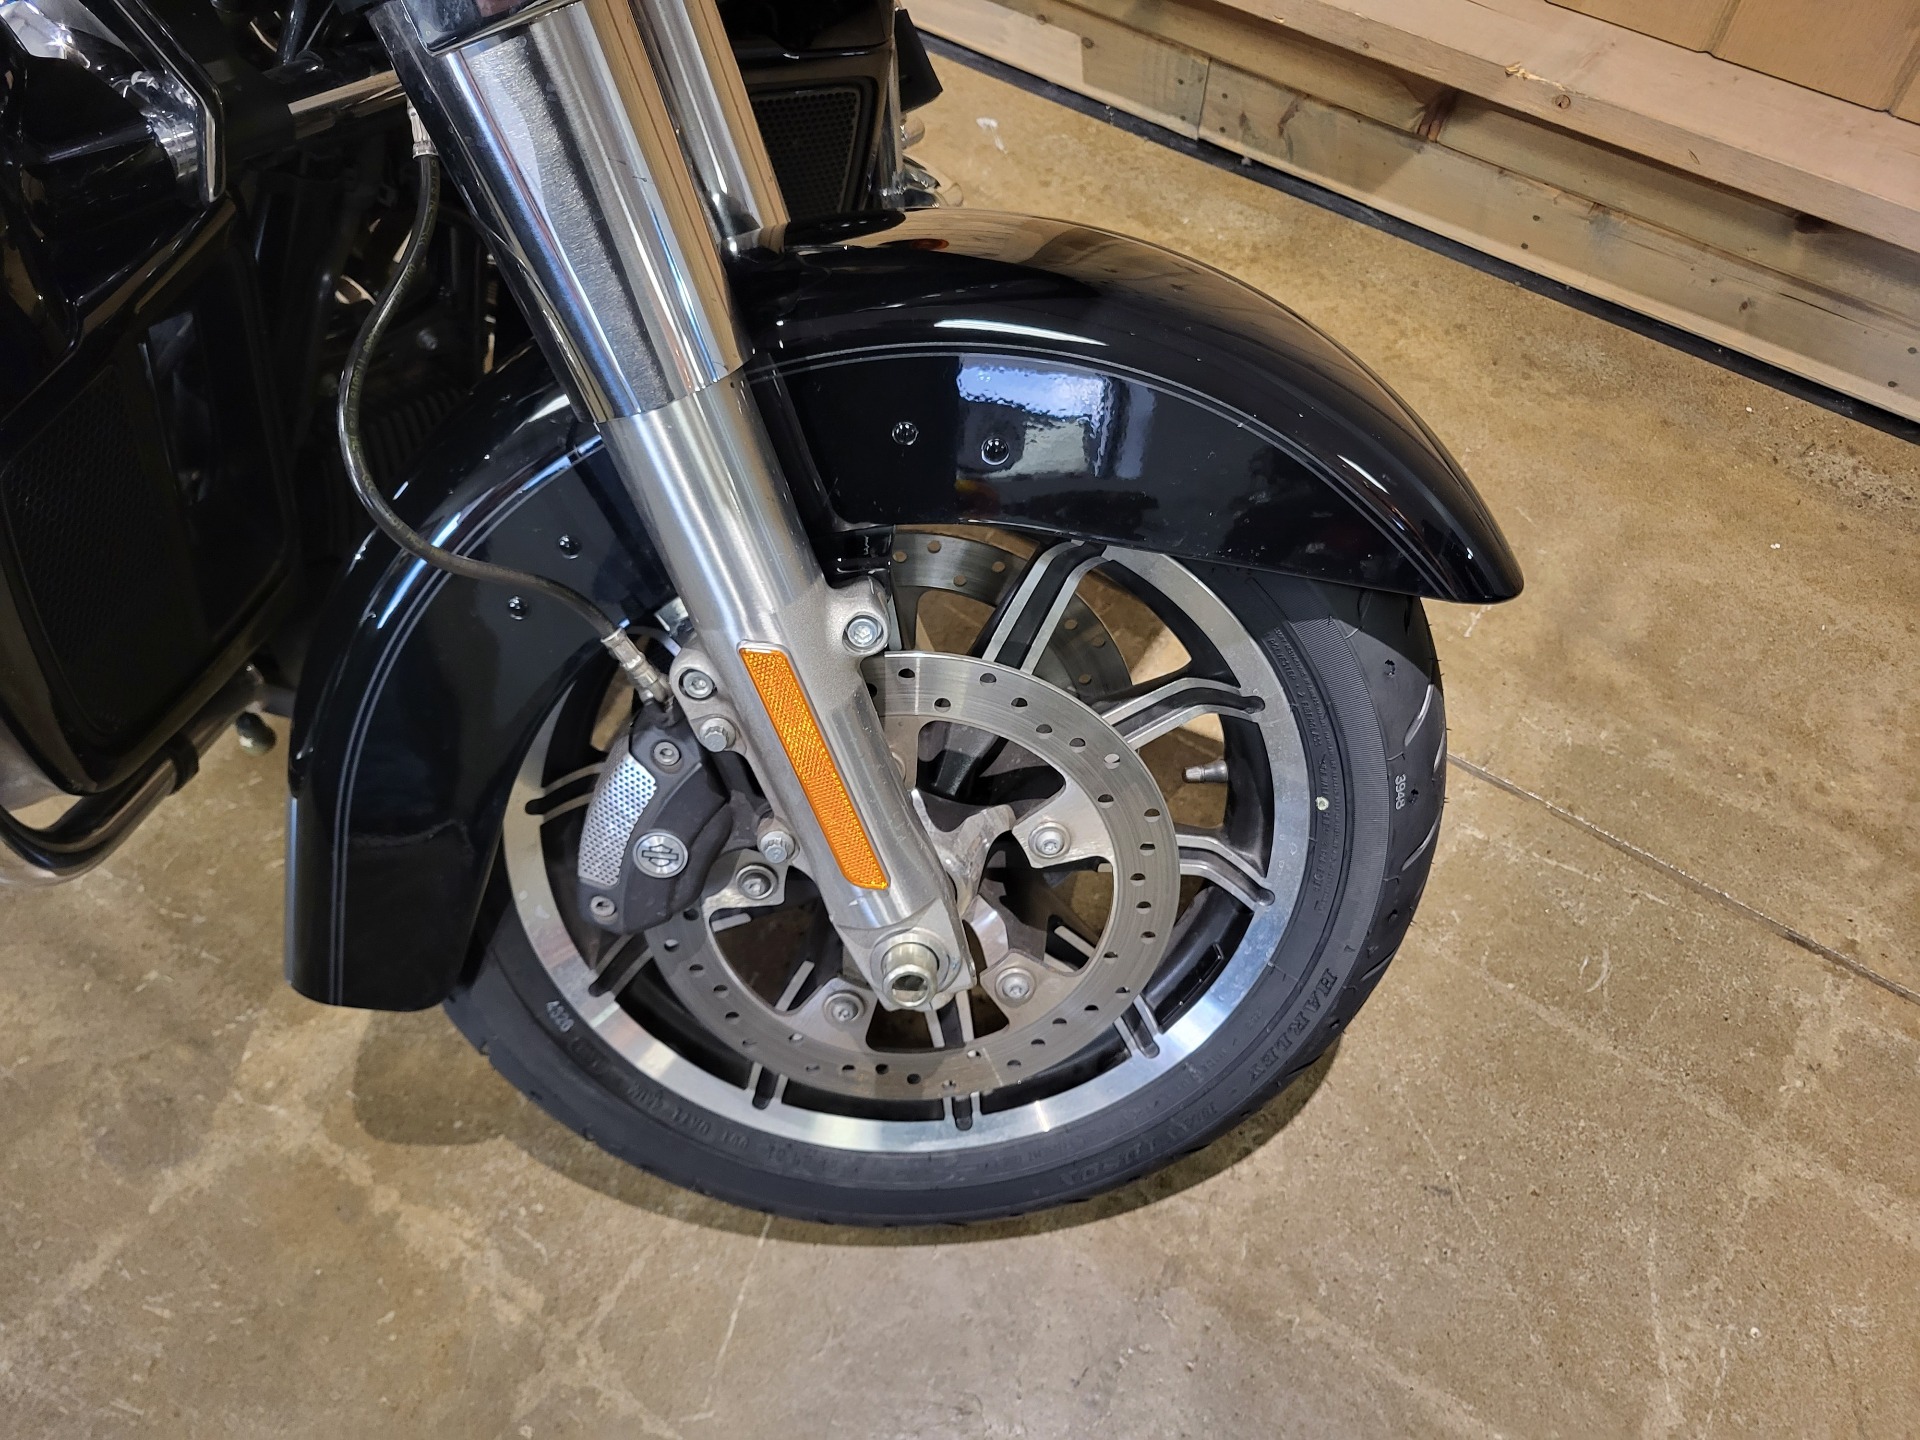 2019 Harley-Davidson Road Glide® Ultra in Mentor, Ohio - Photo 10